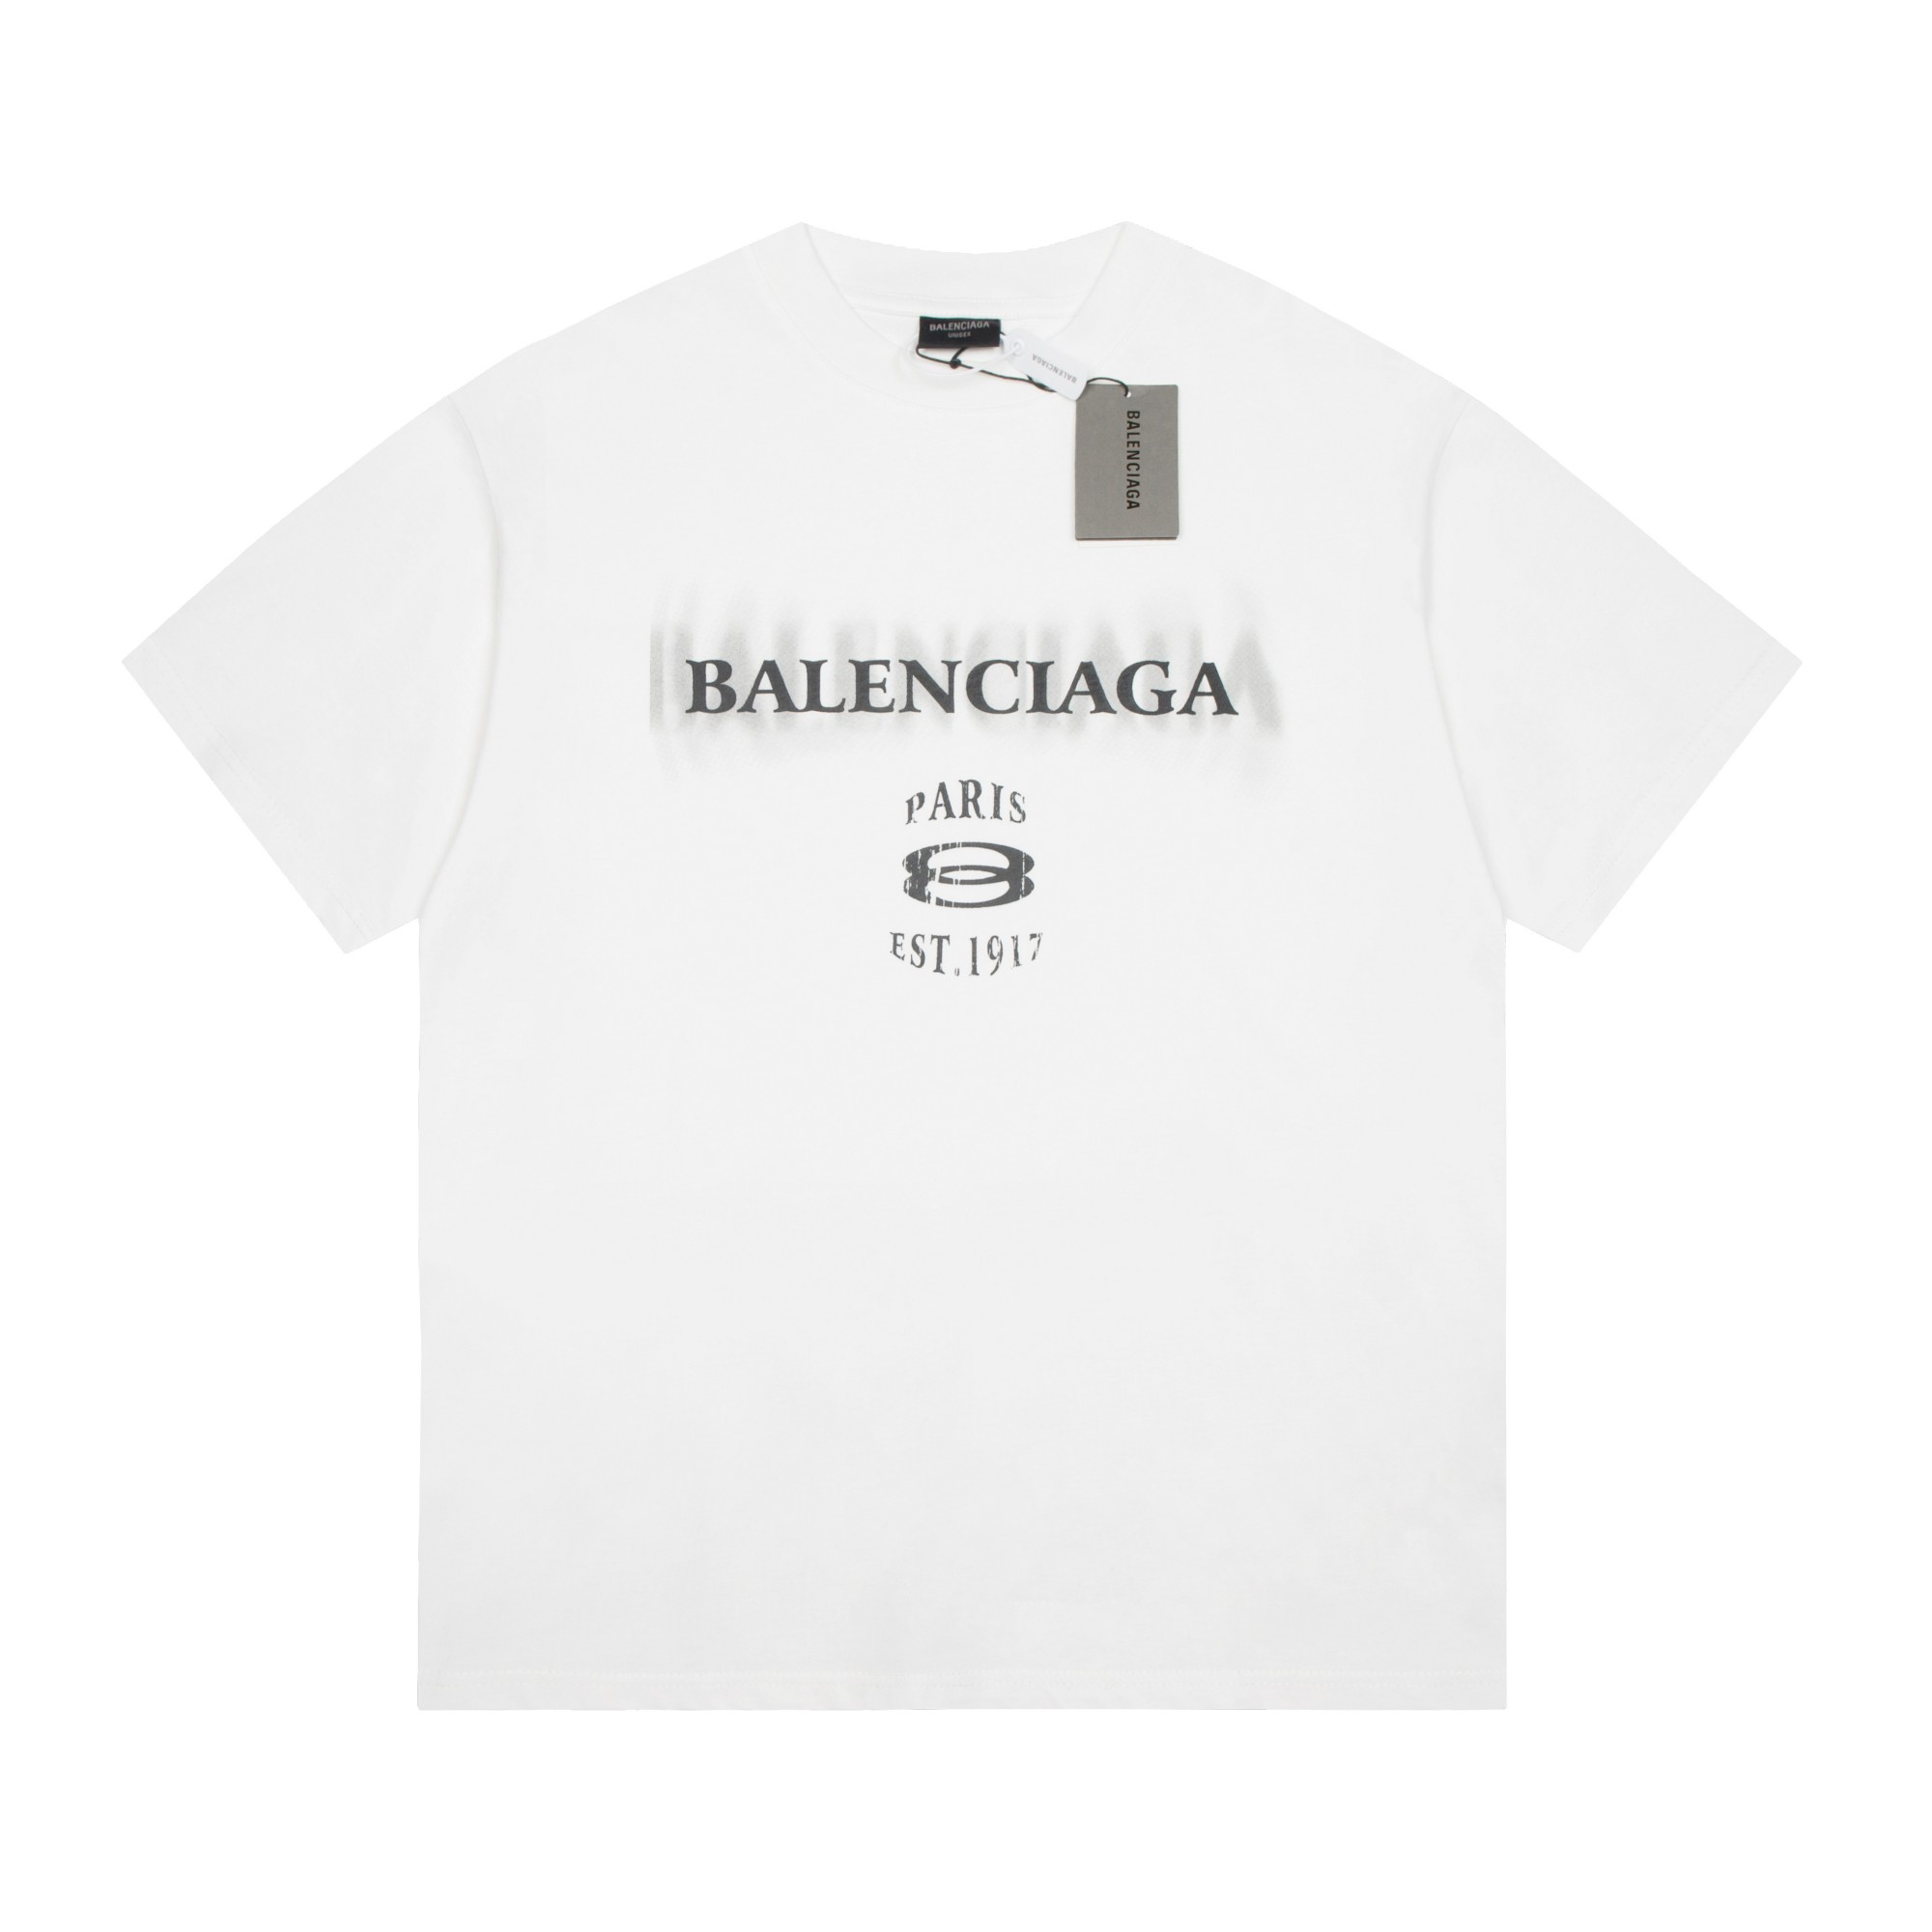 Balenciaga Clothing T-Shirt Printing Unisex Cotton Short Sleeve